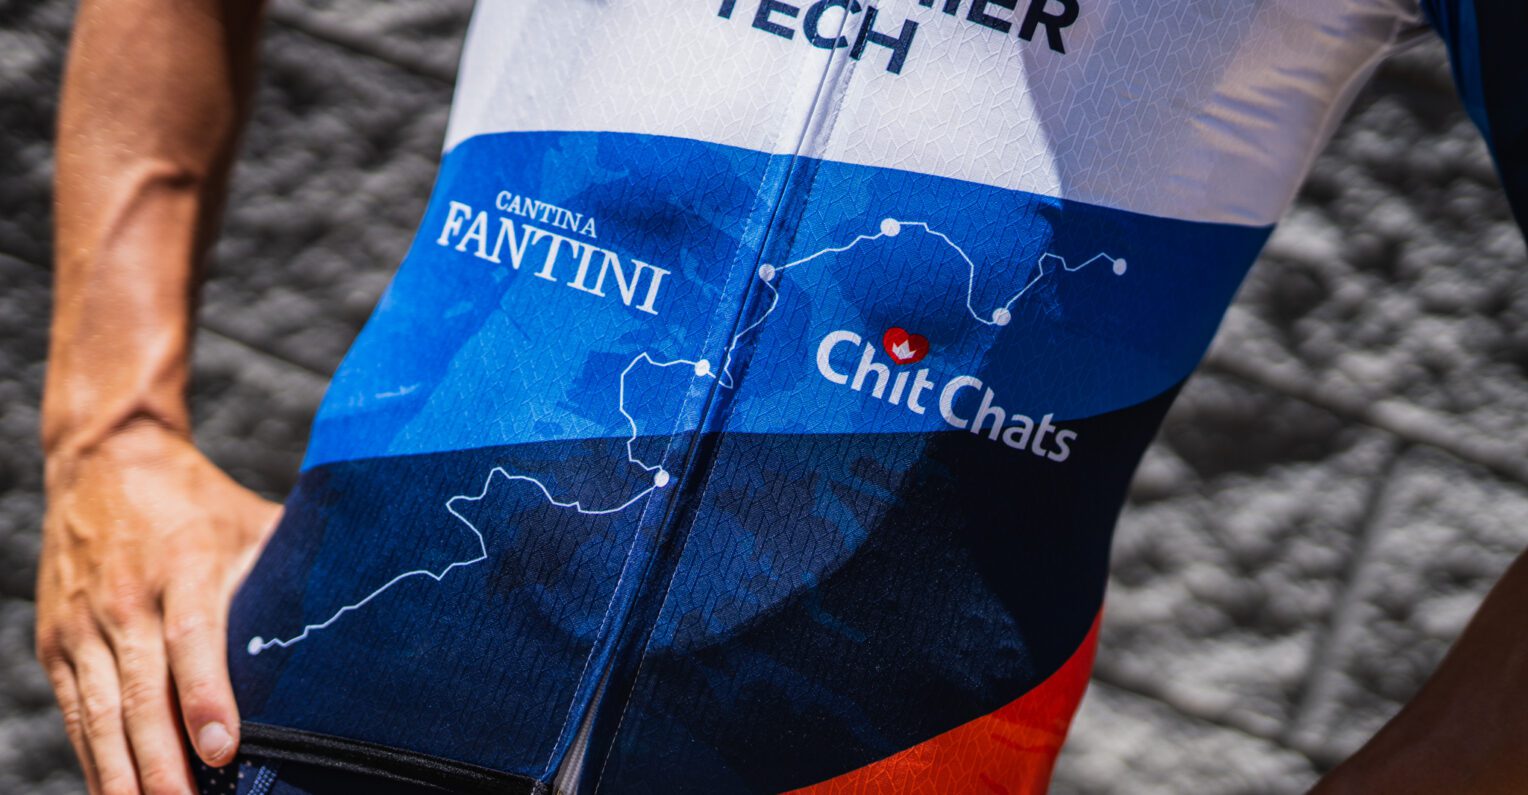 Israel – Premier Tech celebrates Vini Fantini with Giro d'Italia jersey -  Israel — Premier Tech Pro Cycling Team